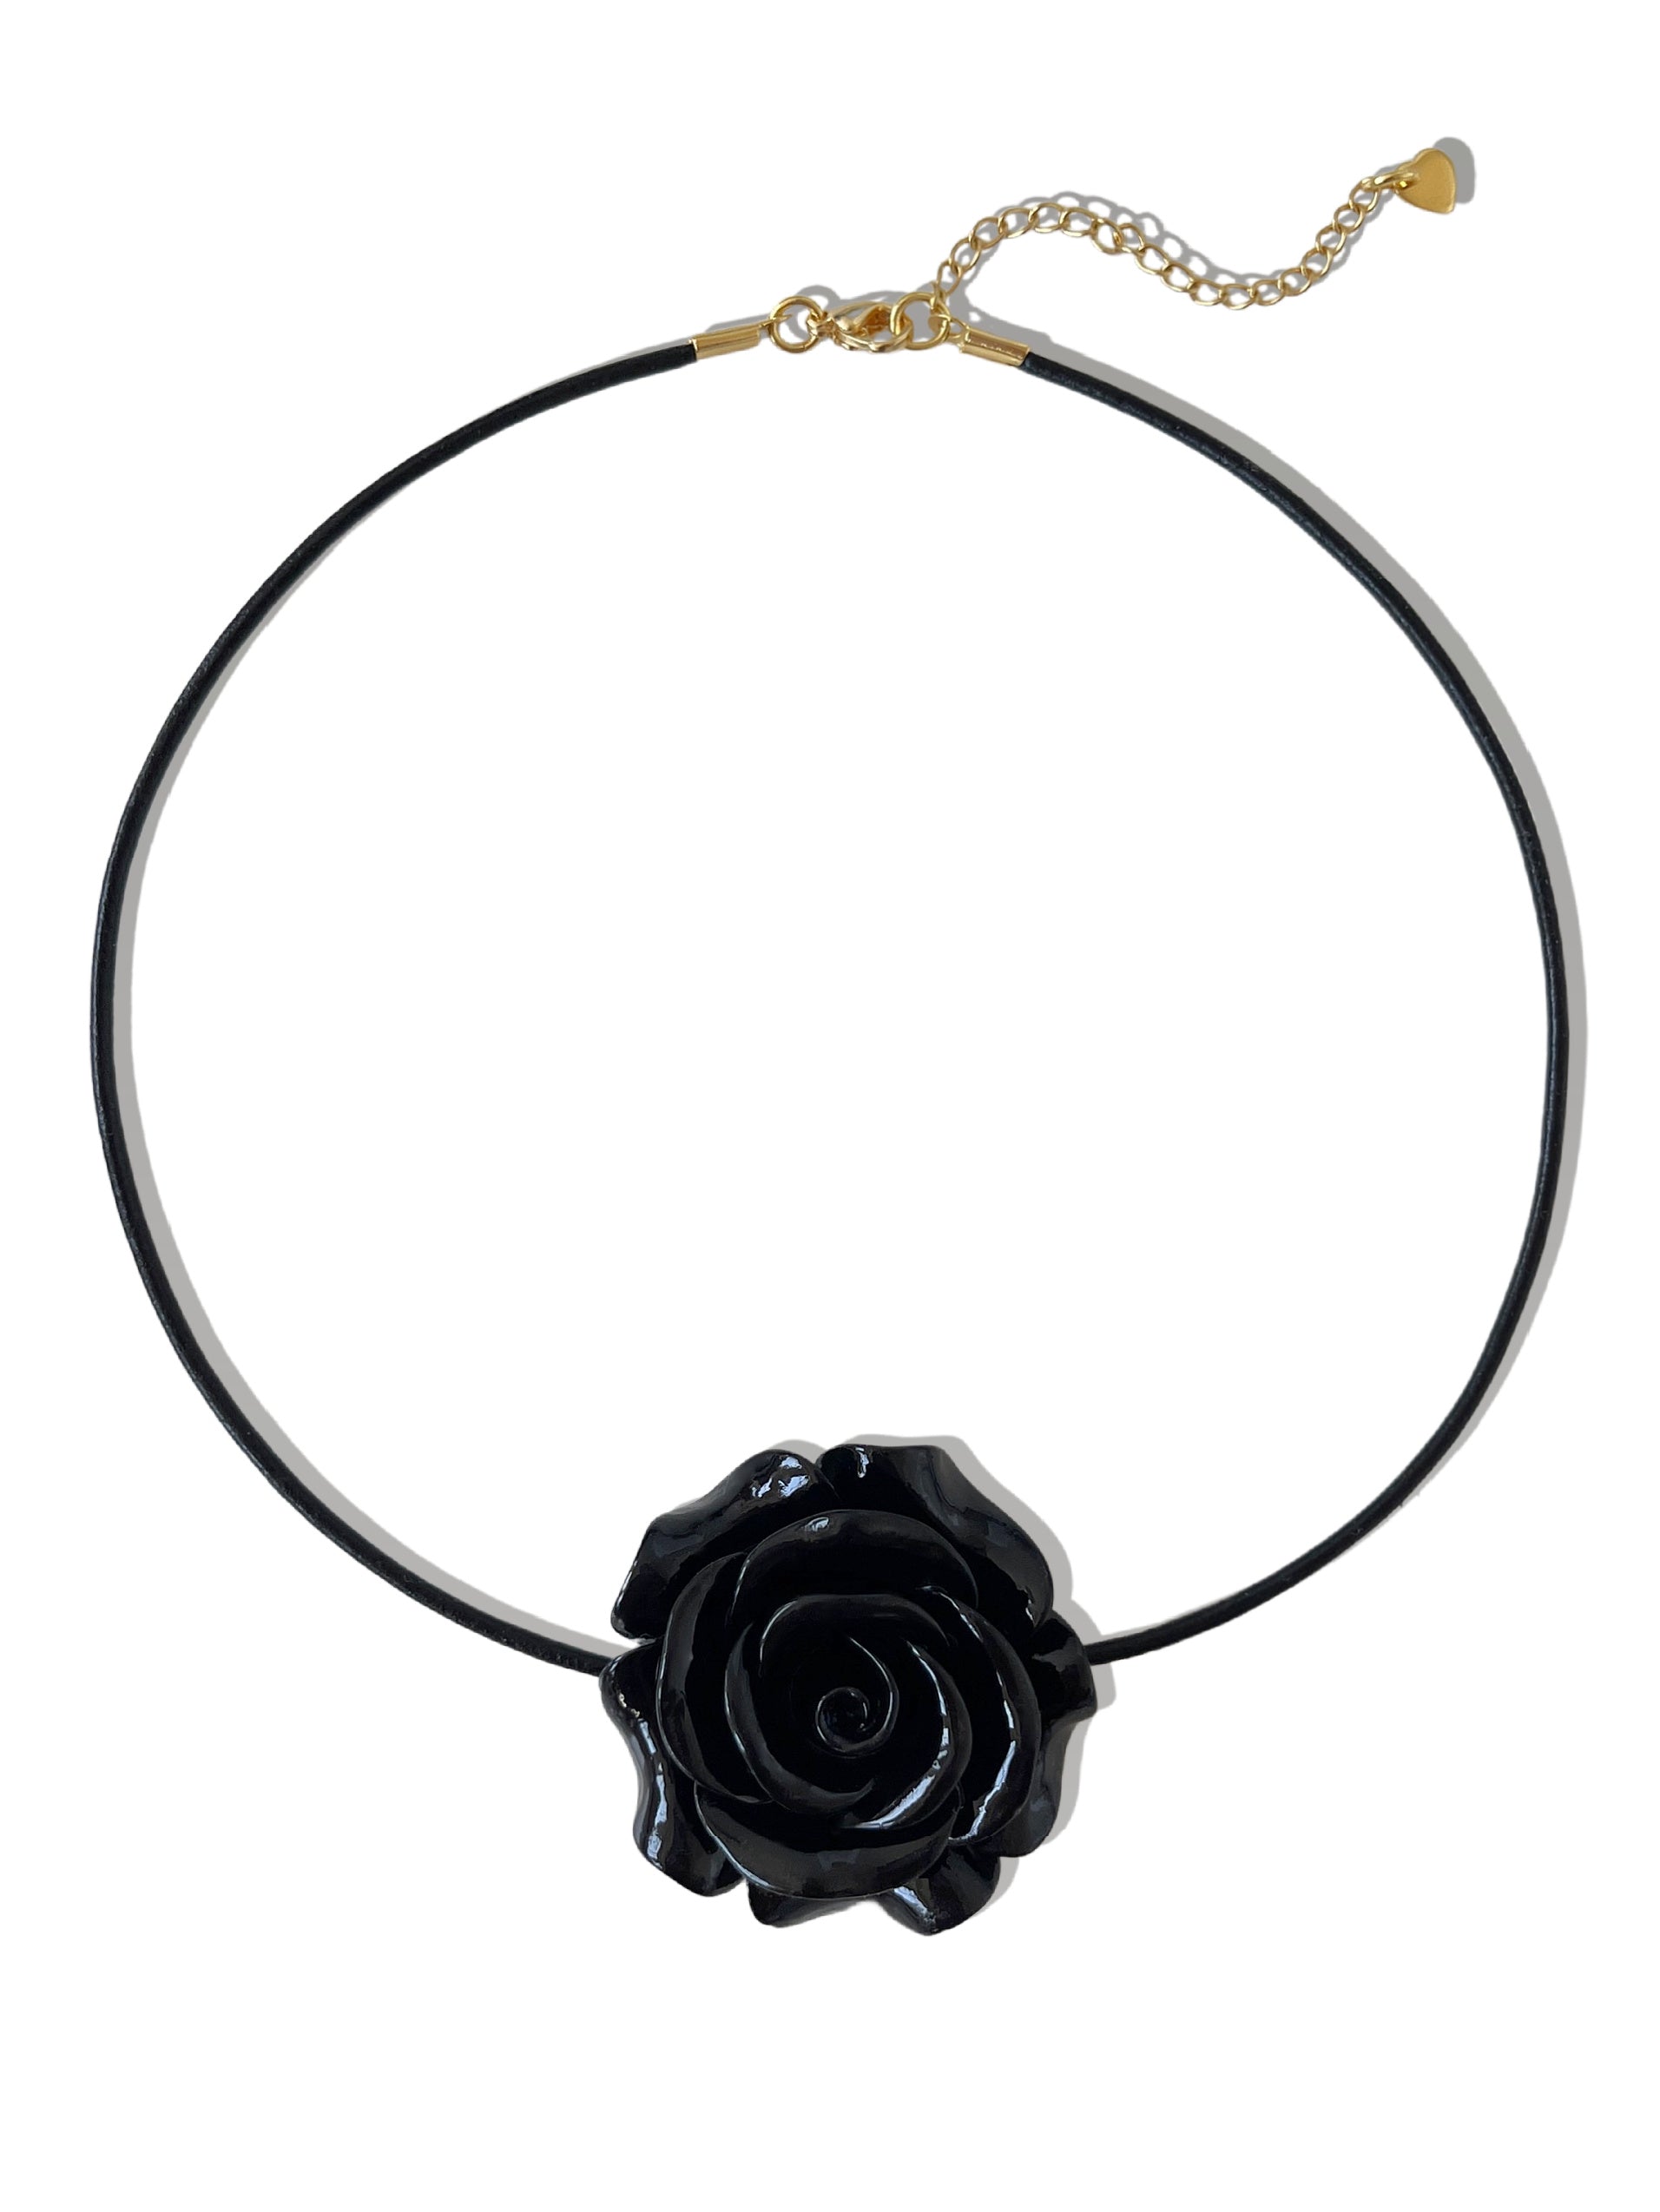 Black Rose Glass Pendant -Black Rose Jewelry -Rose Necklace - Art Pendant -  BlackNecklace -Black Rose Pendant,Black Rose Charm | Wish